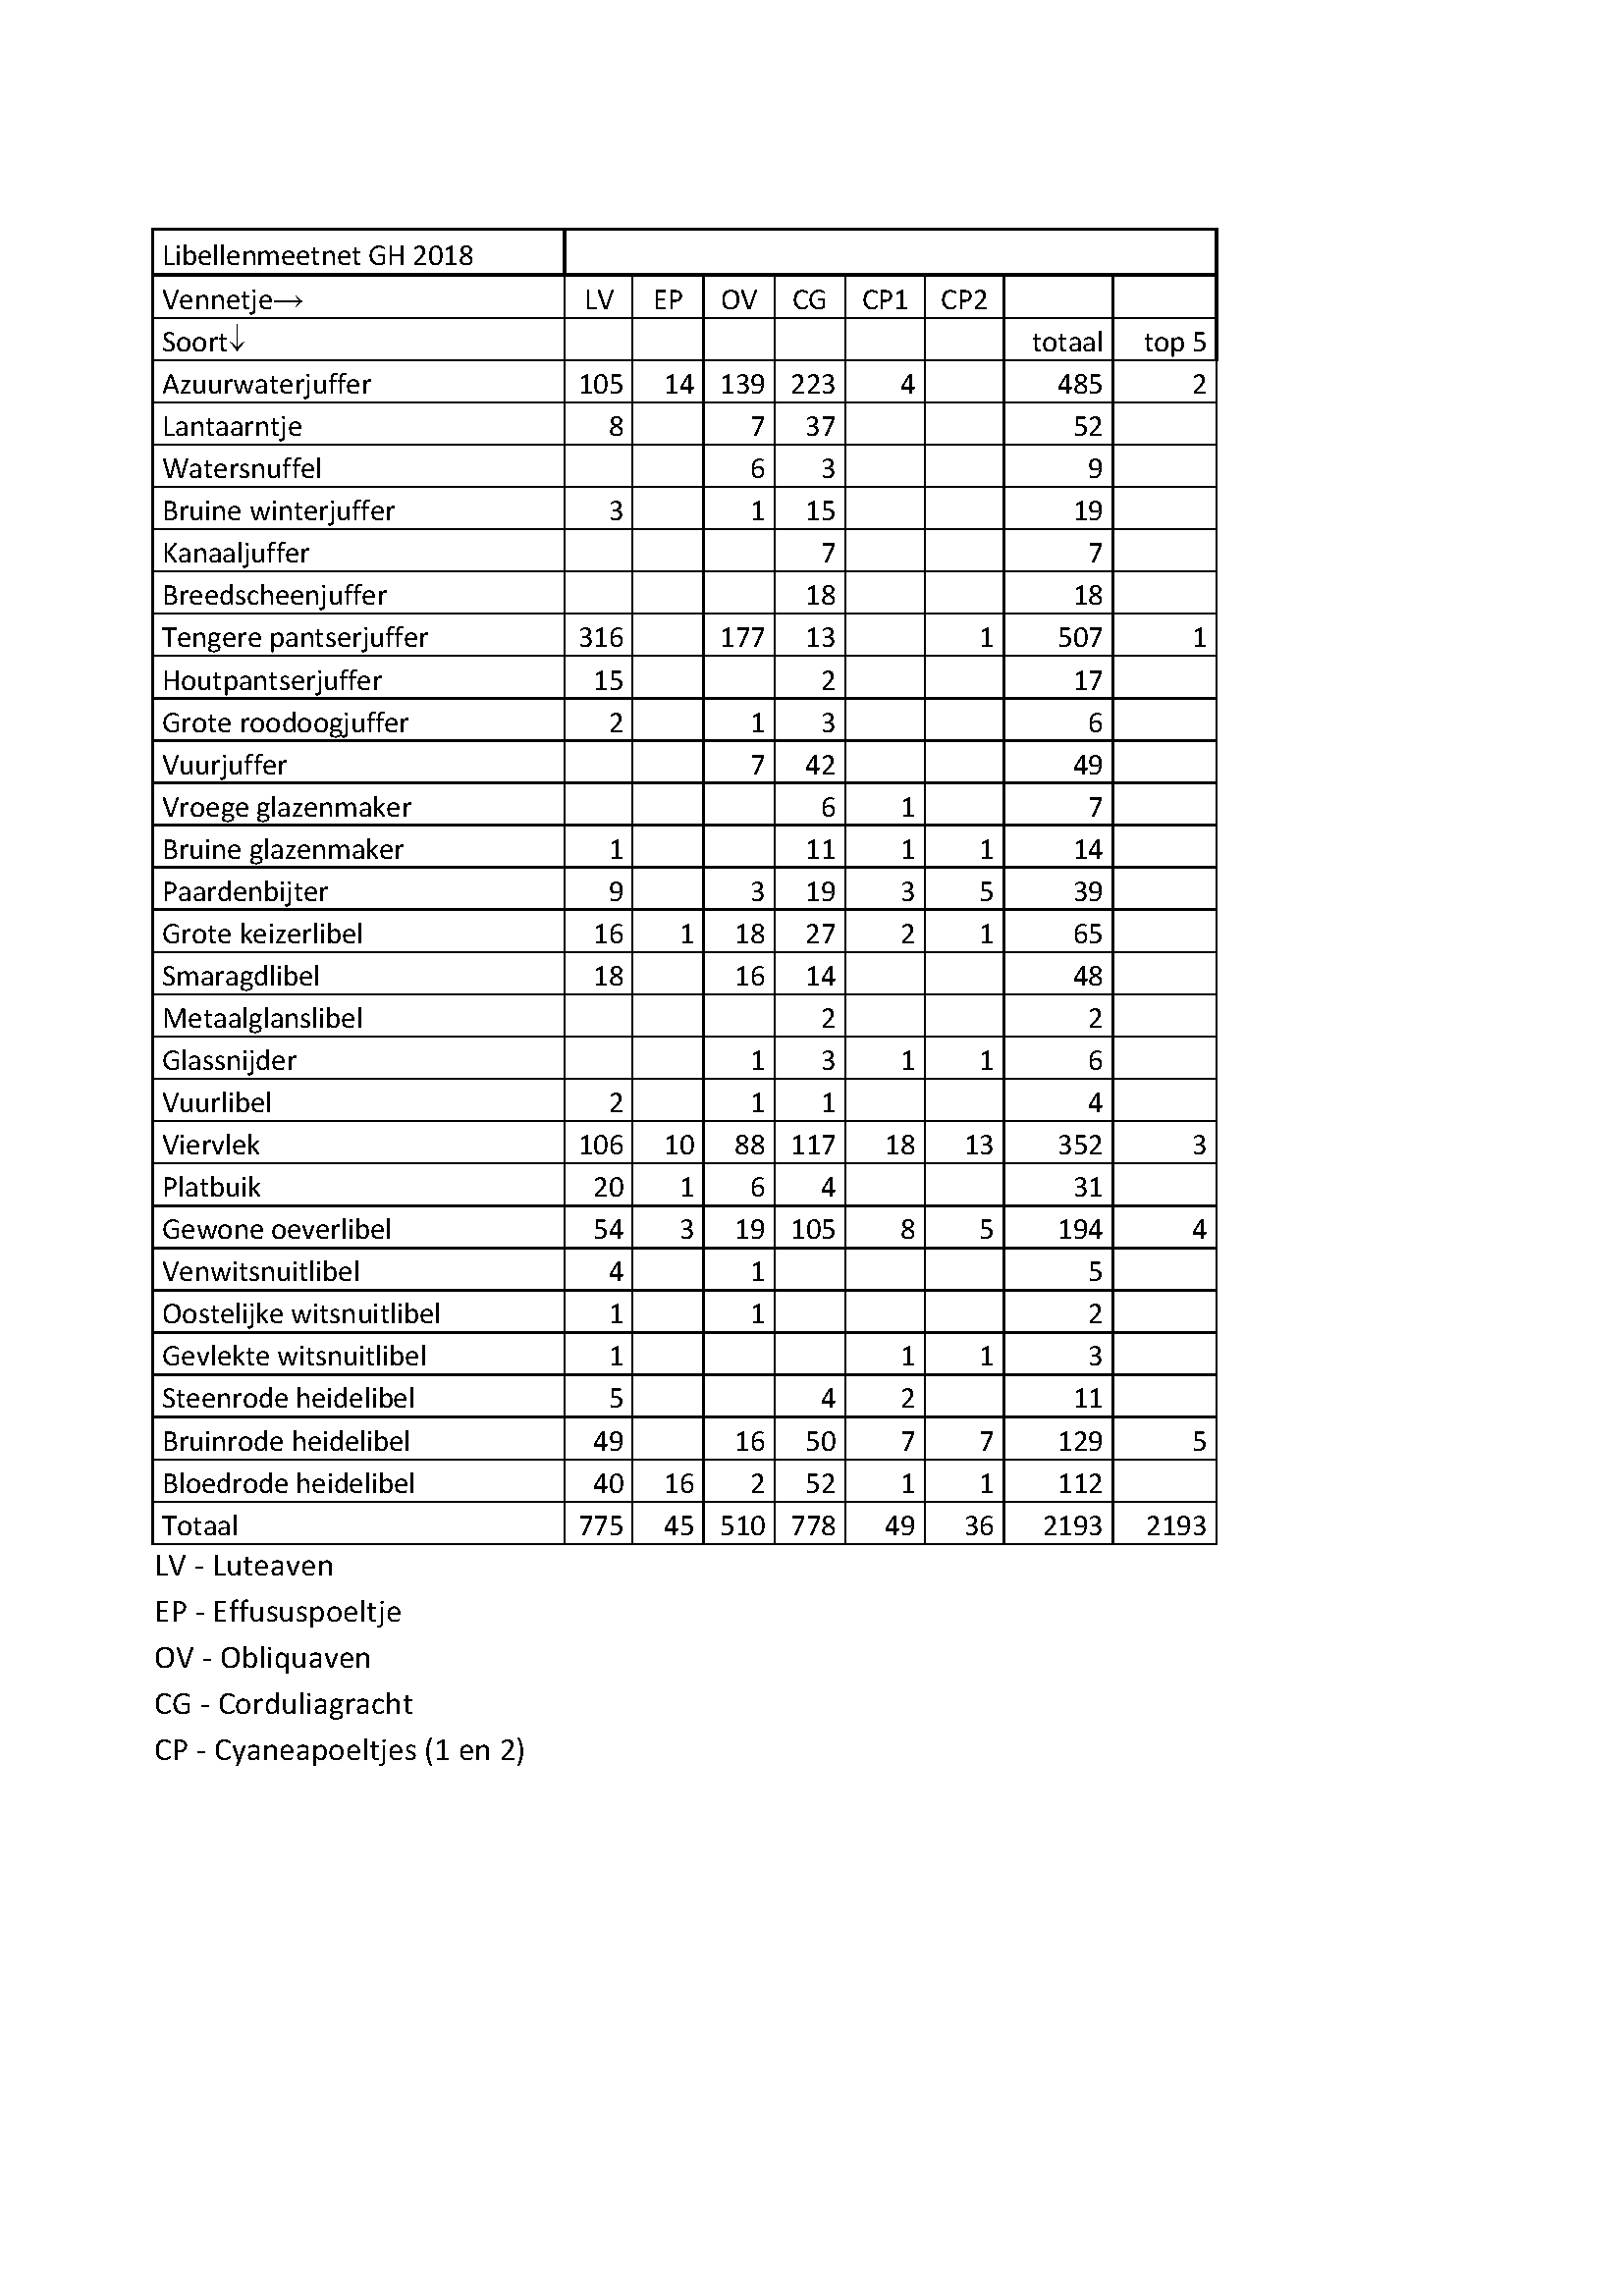 tabel libellen GH 2018